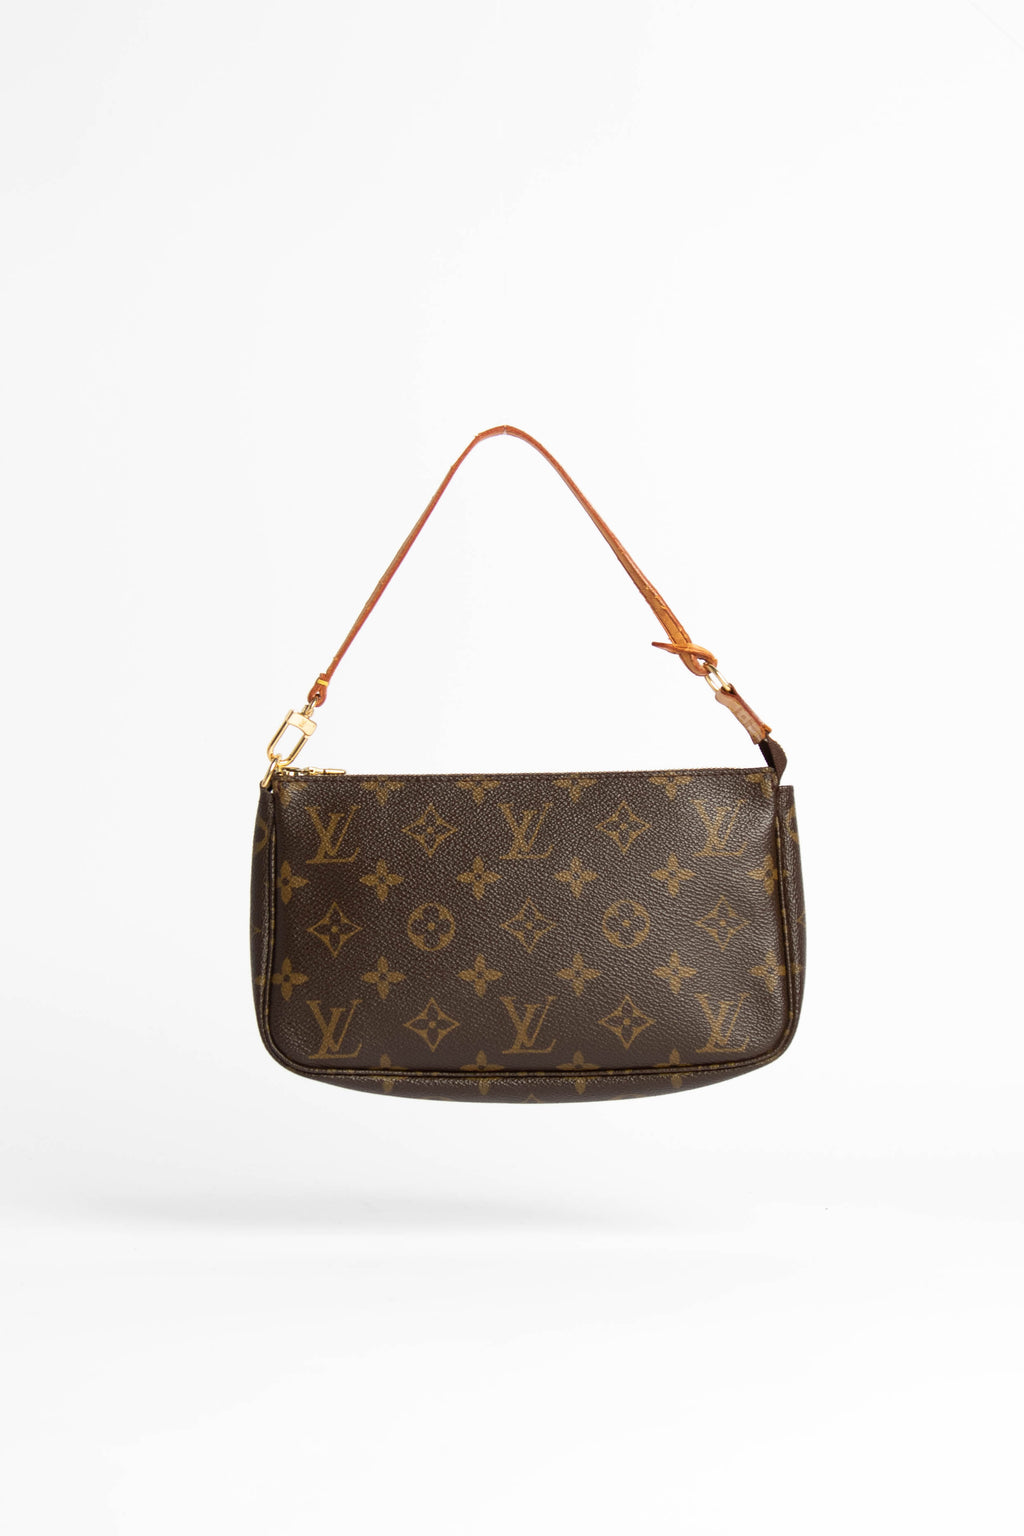 Louis Vuitton Black Quilted Pochette Coussin Bag – I MISS YOU VINTAGE